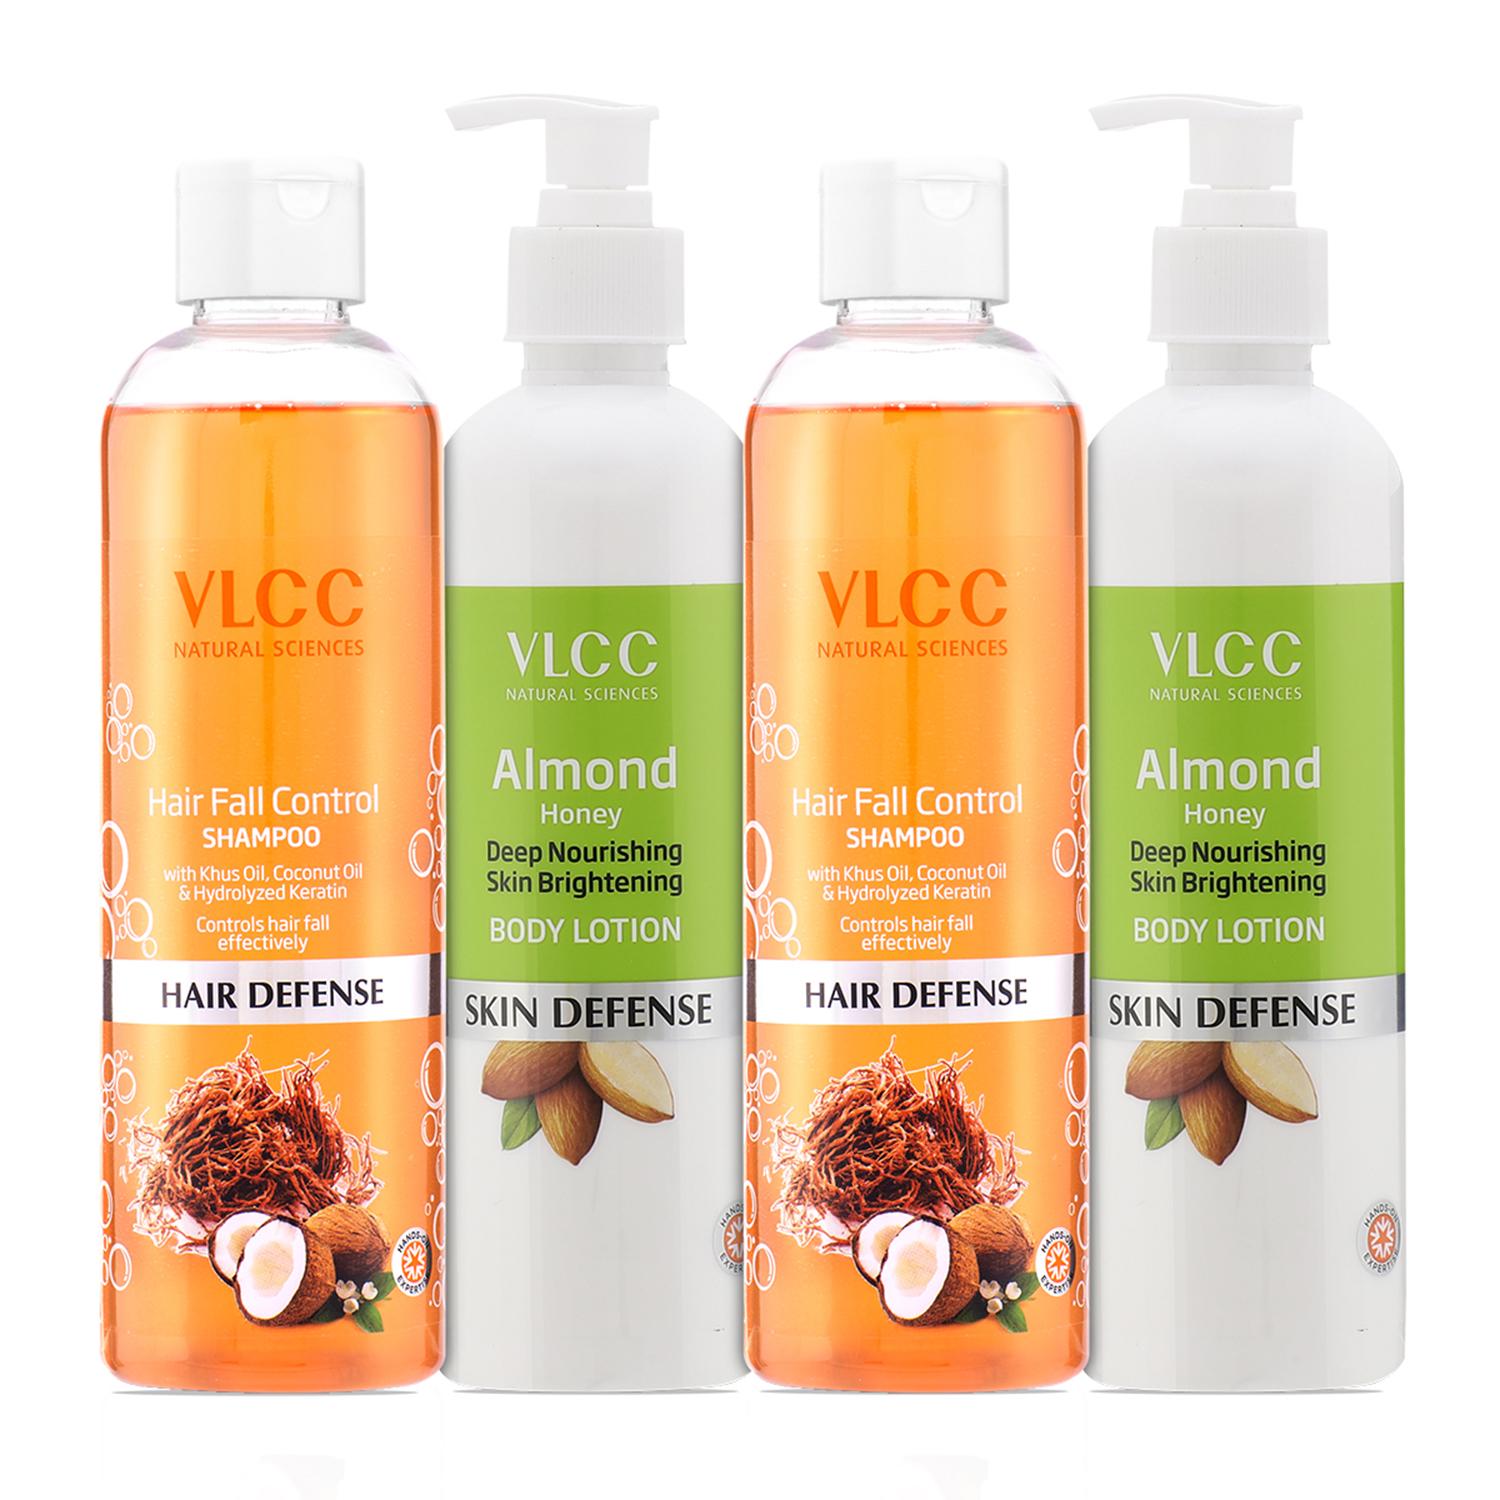 VLCC | VLCC Hair Fall Control Shampoo & Almond Honey Skin Brightening Body Lotion Combo